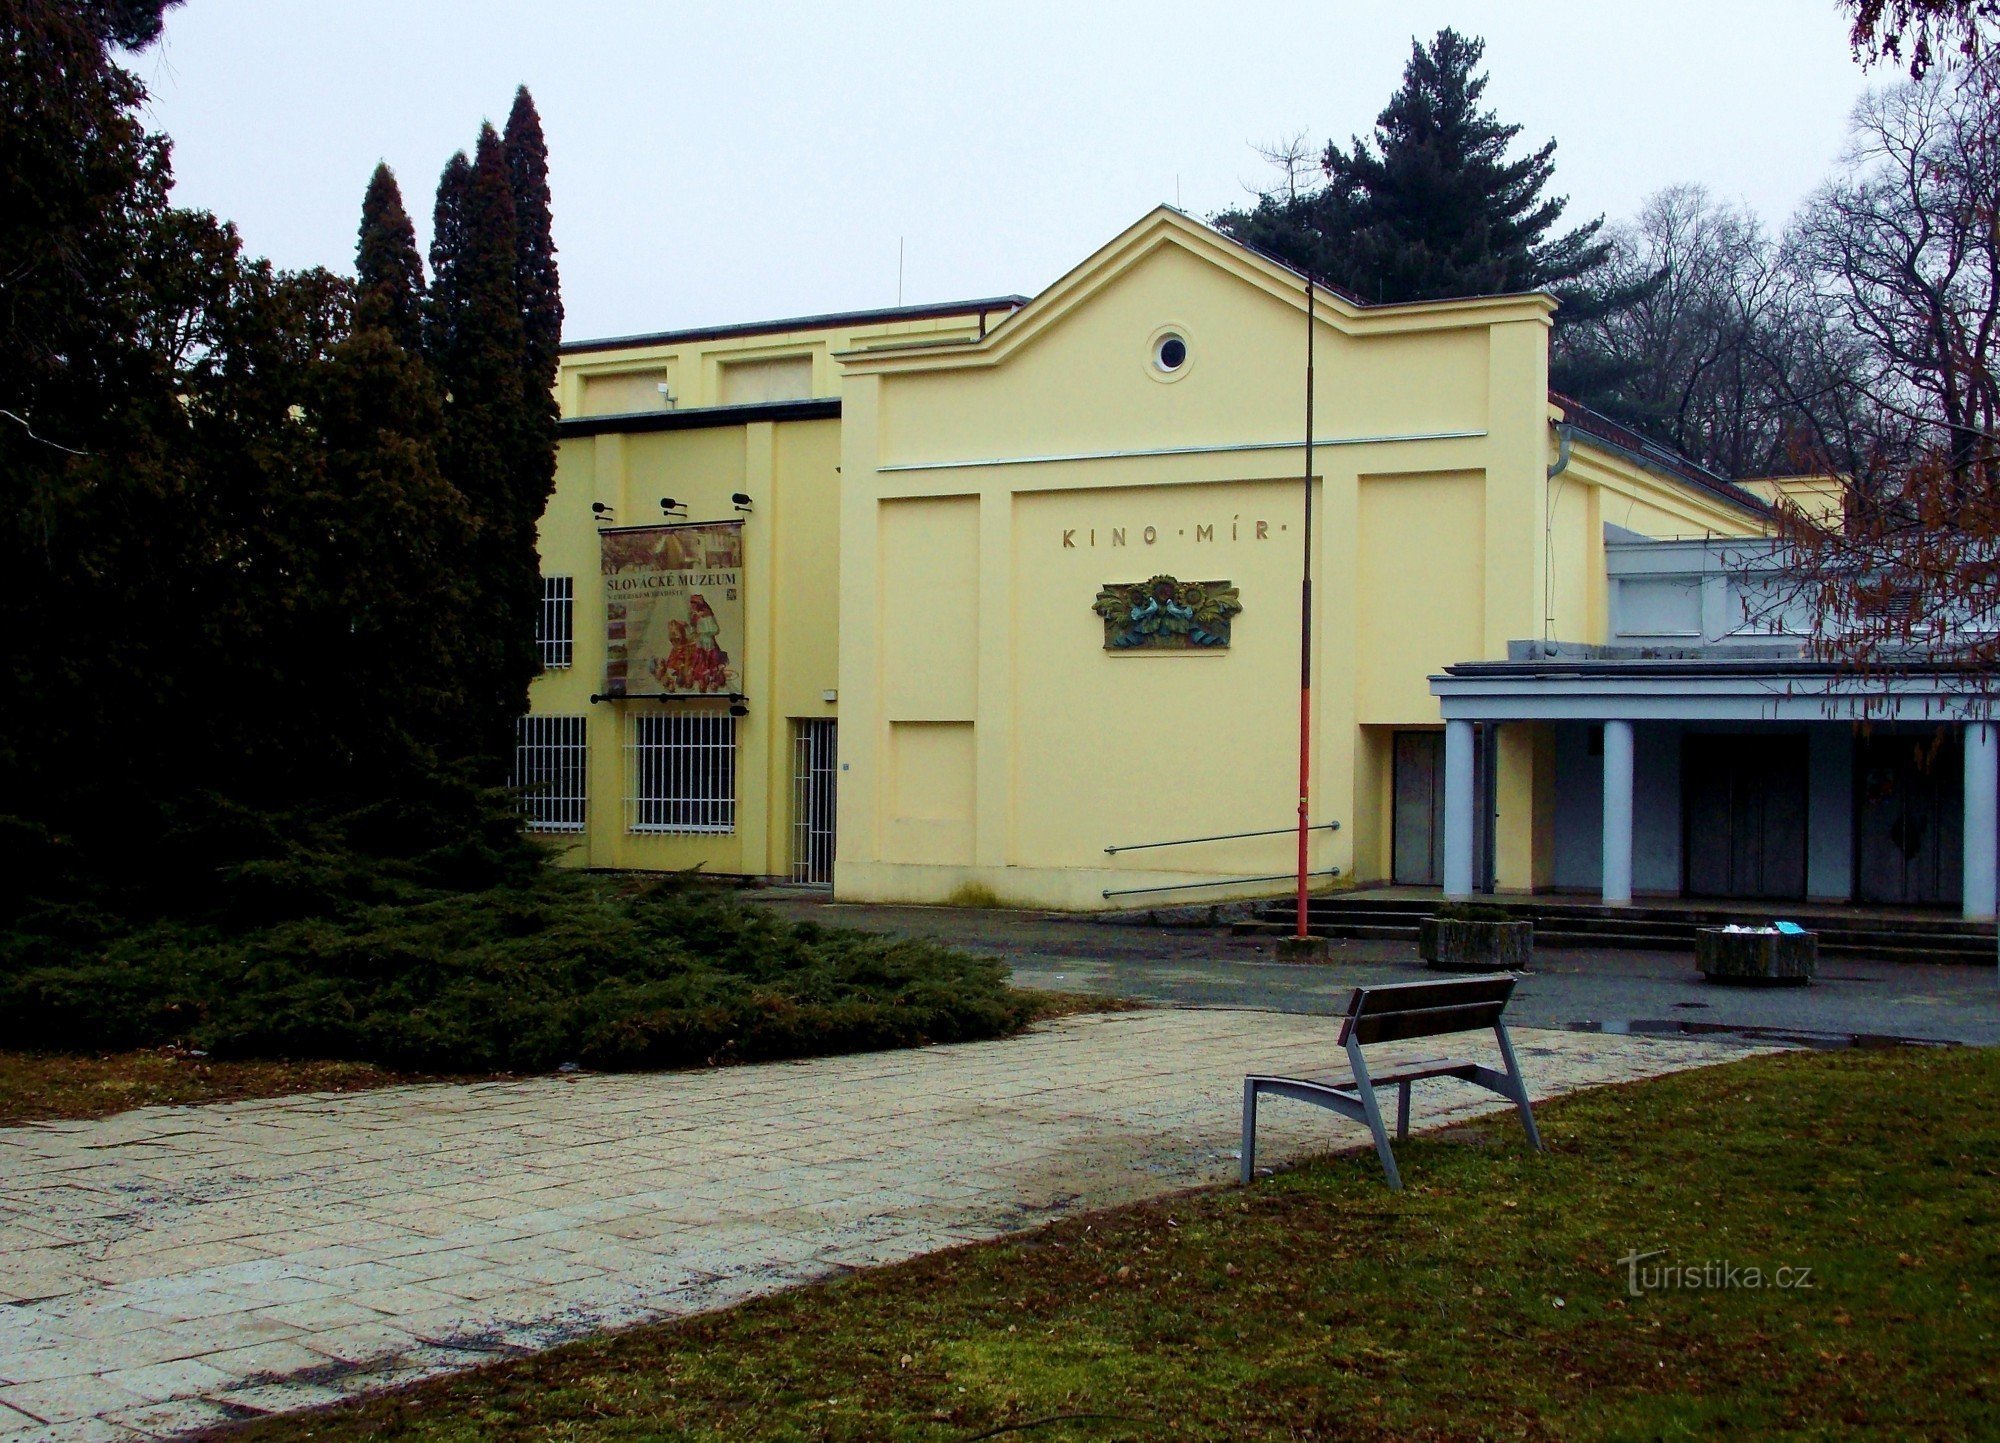 Cinema Mír overfor Šarovec Hotel